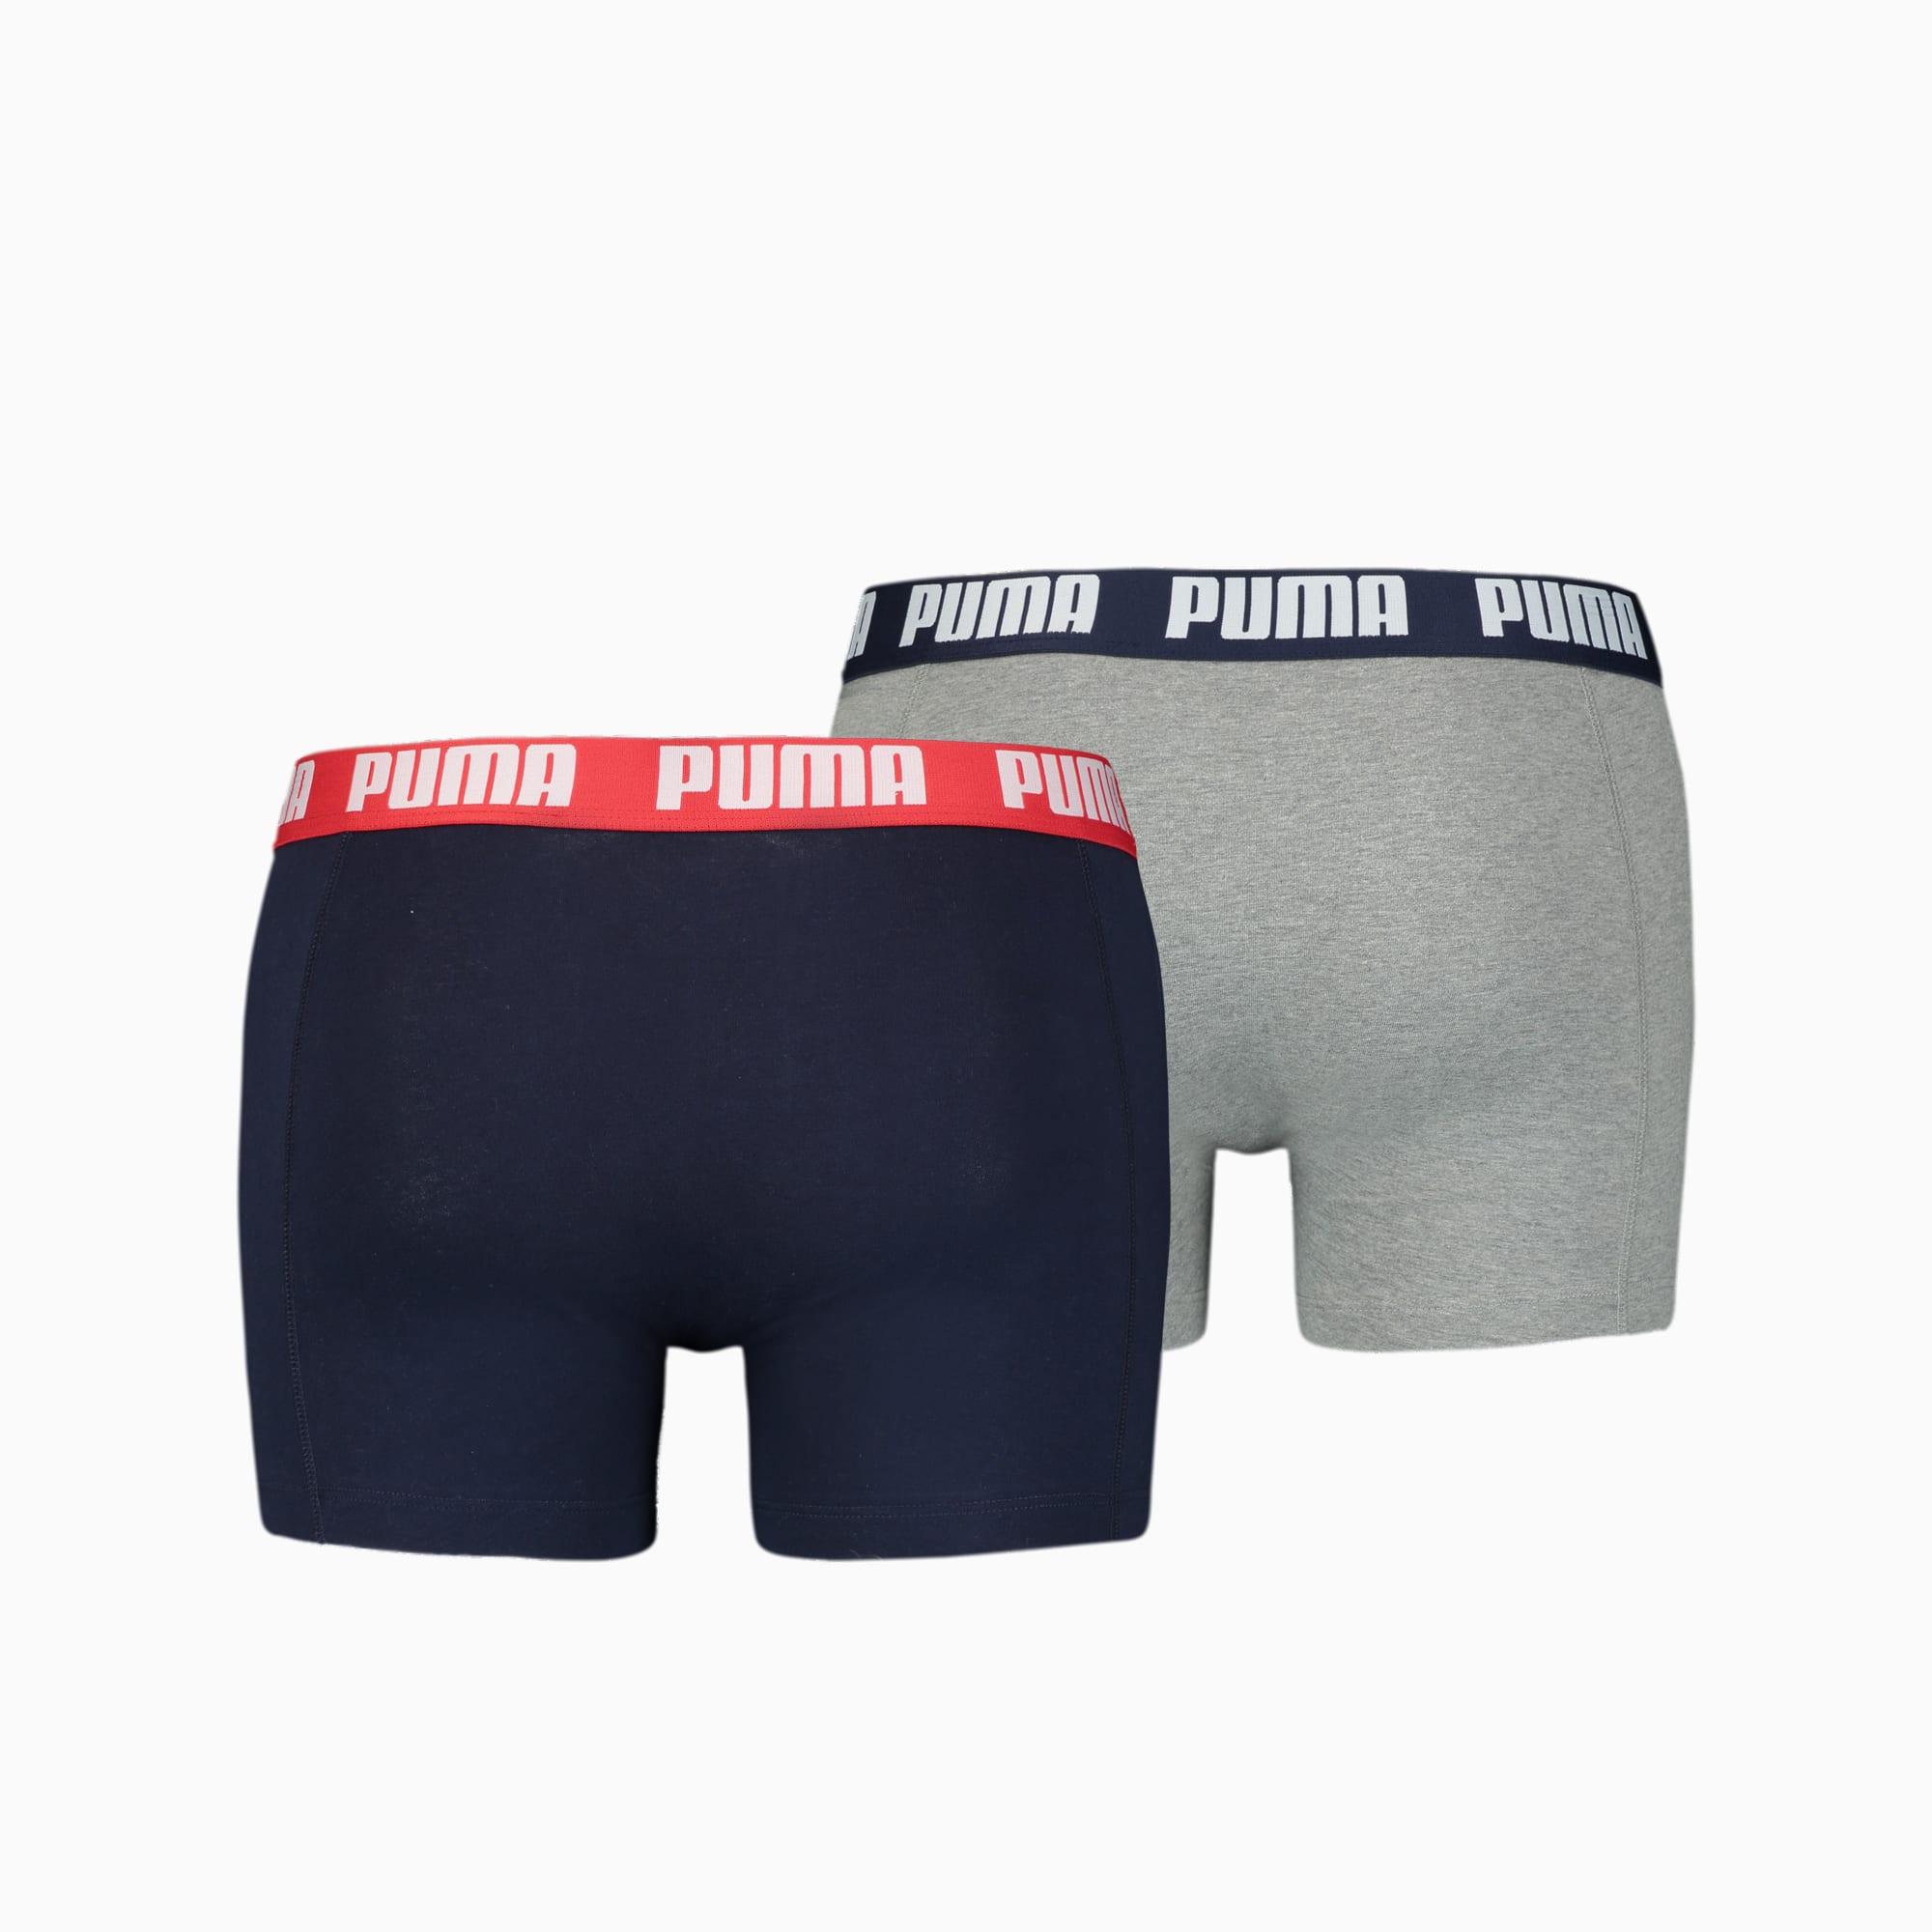 PUMA Basic Boxershorts Herren 2er-Pack, Mit Grau Melange, Grau/Blau, Größe: M, Kleidung